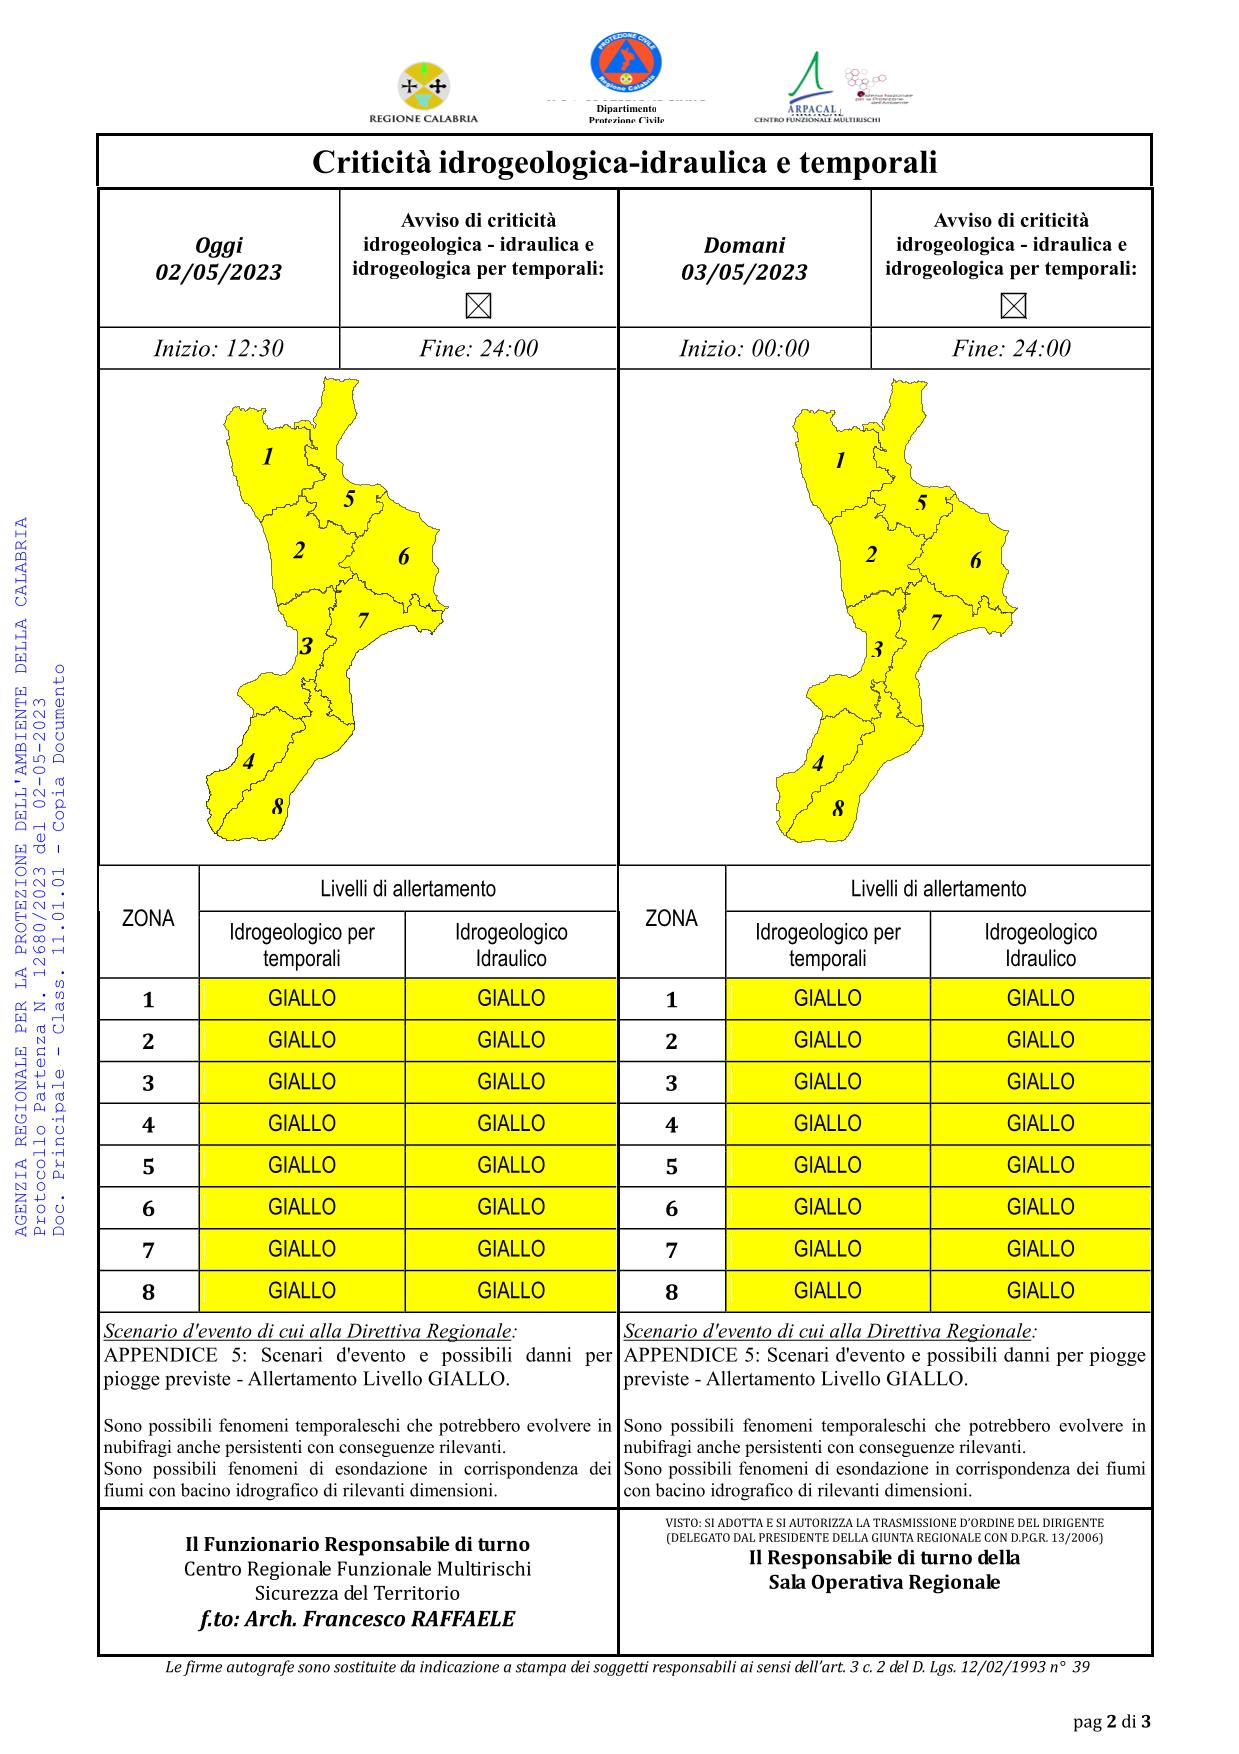 Criticità idrogeologica-idraulica e temporali in Calabria 03-05-2023